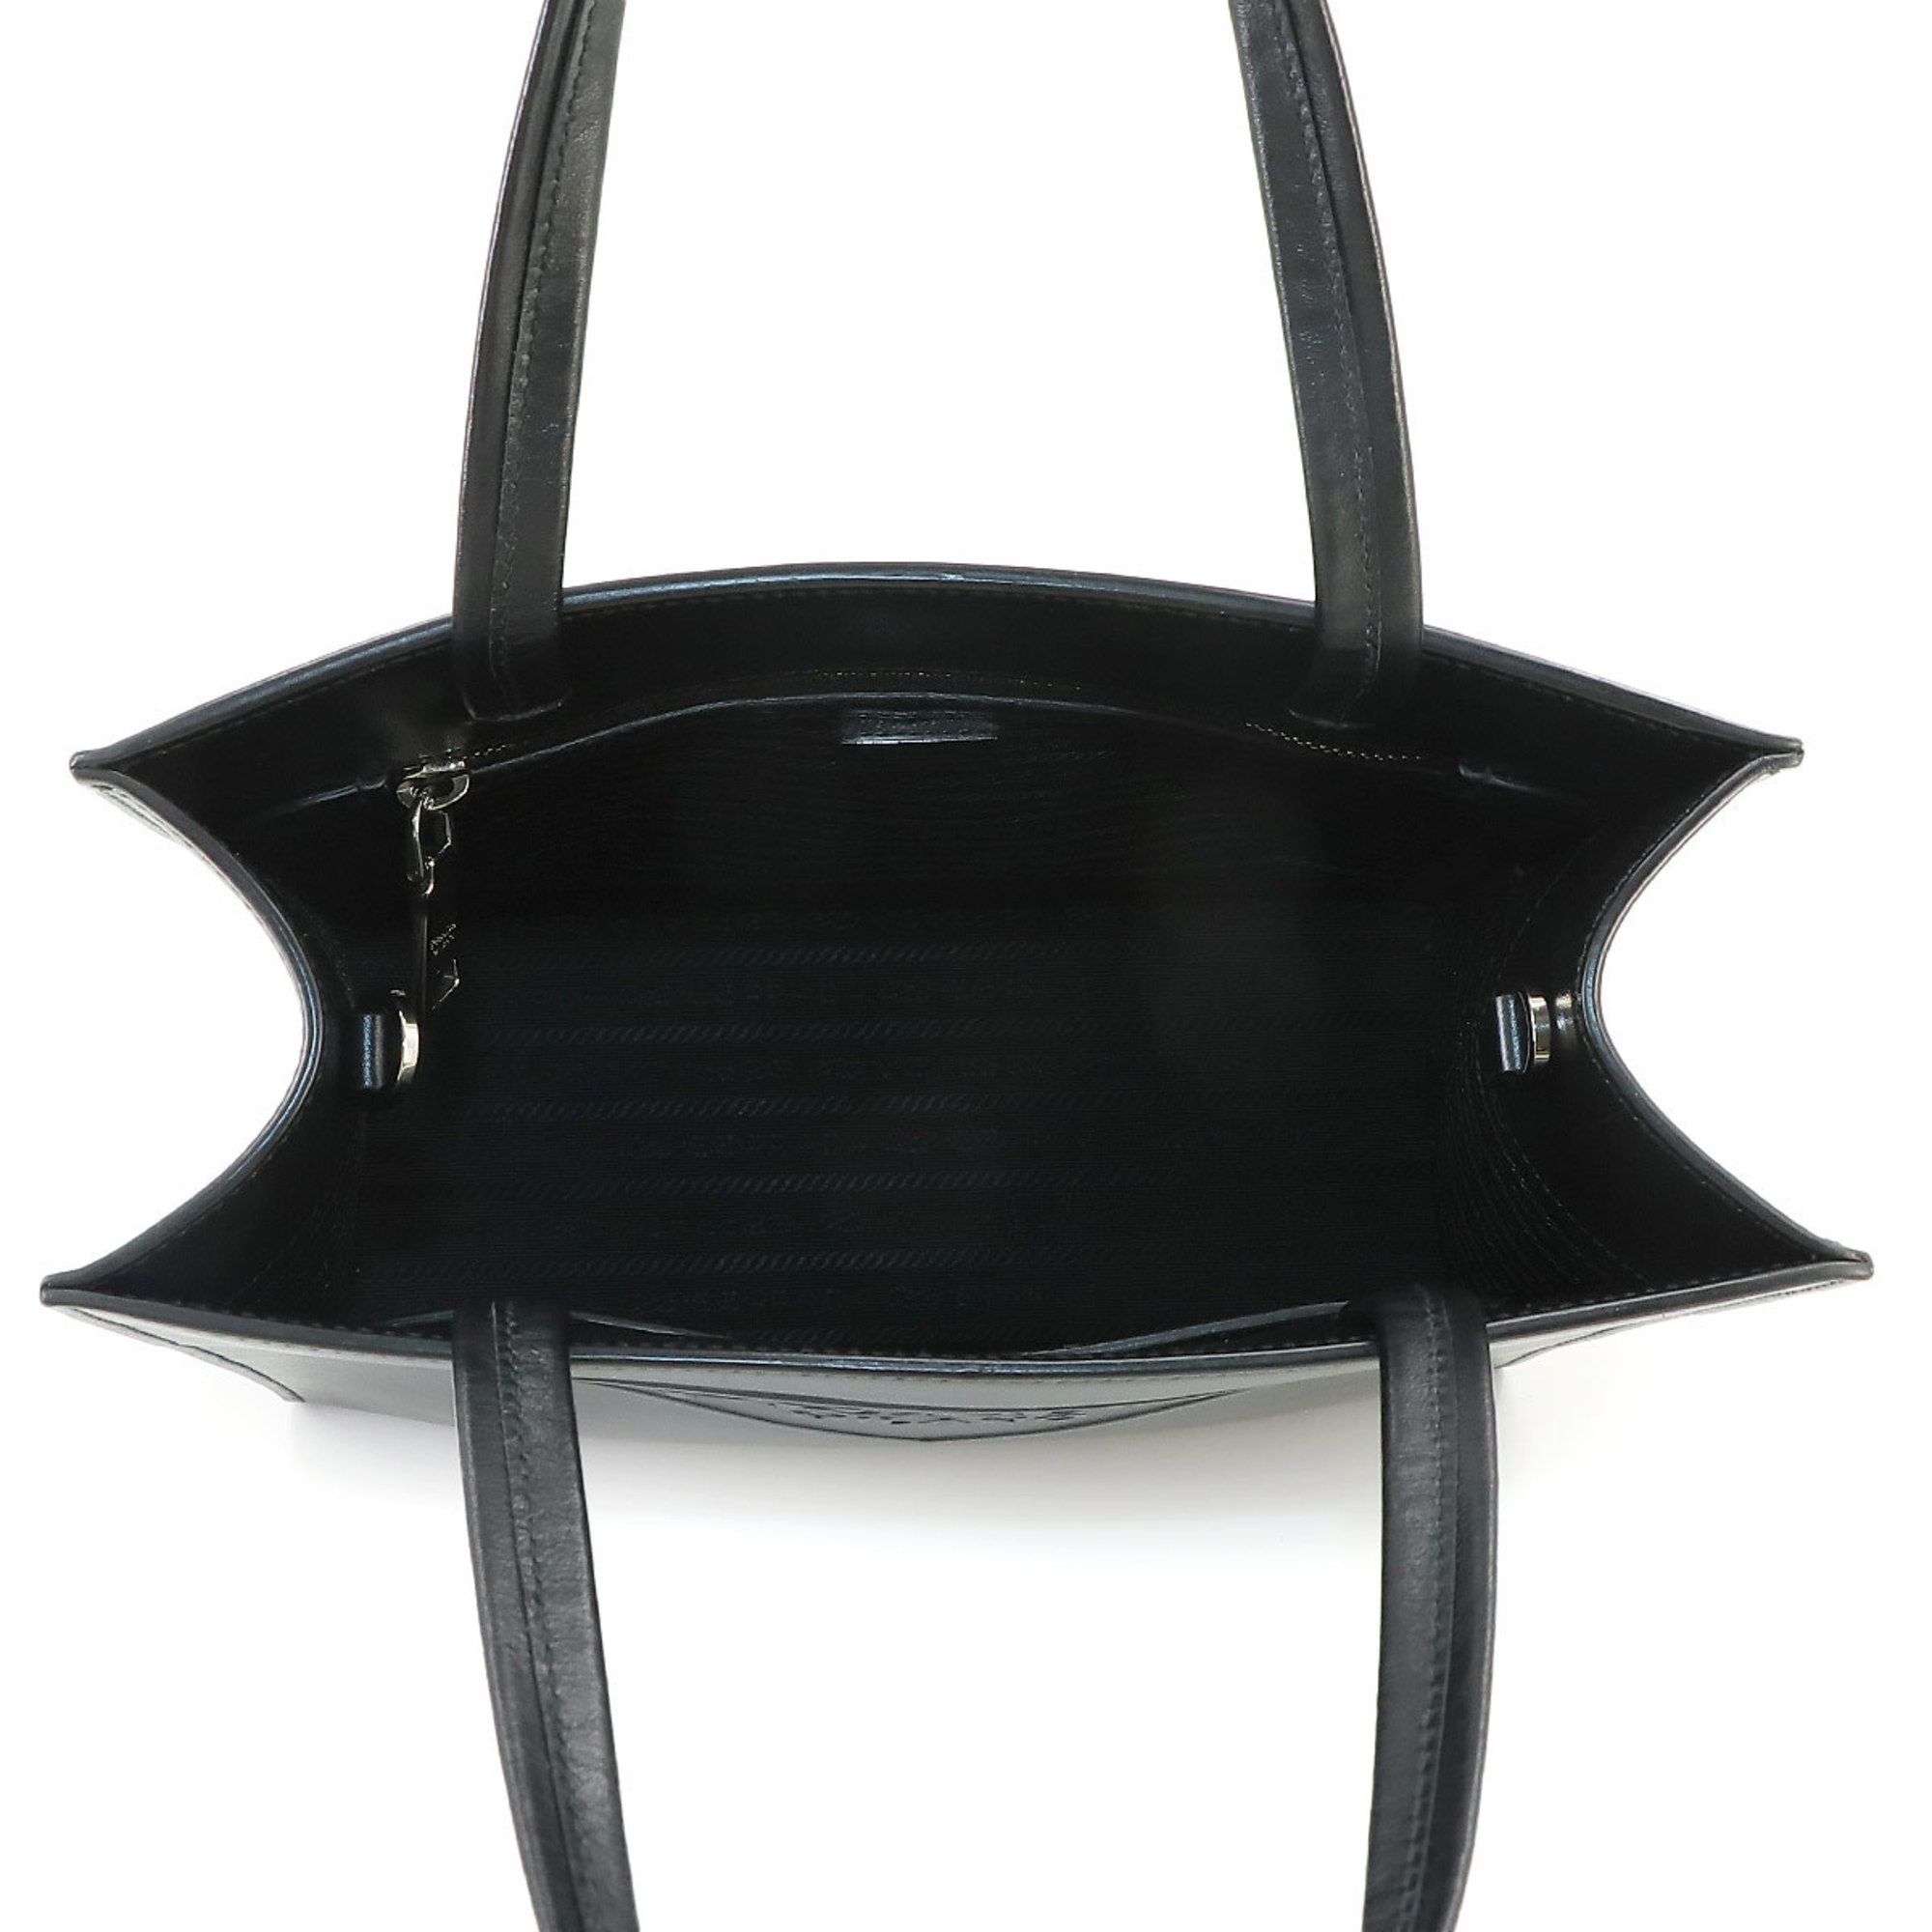 PRADA 2way Tote Shoulder Bag Leather Black 1BG382 Silver Metal Triangle